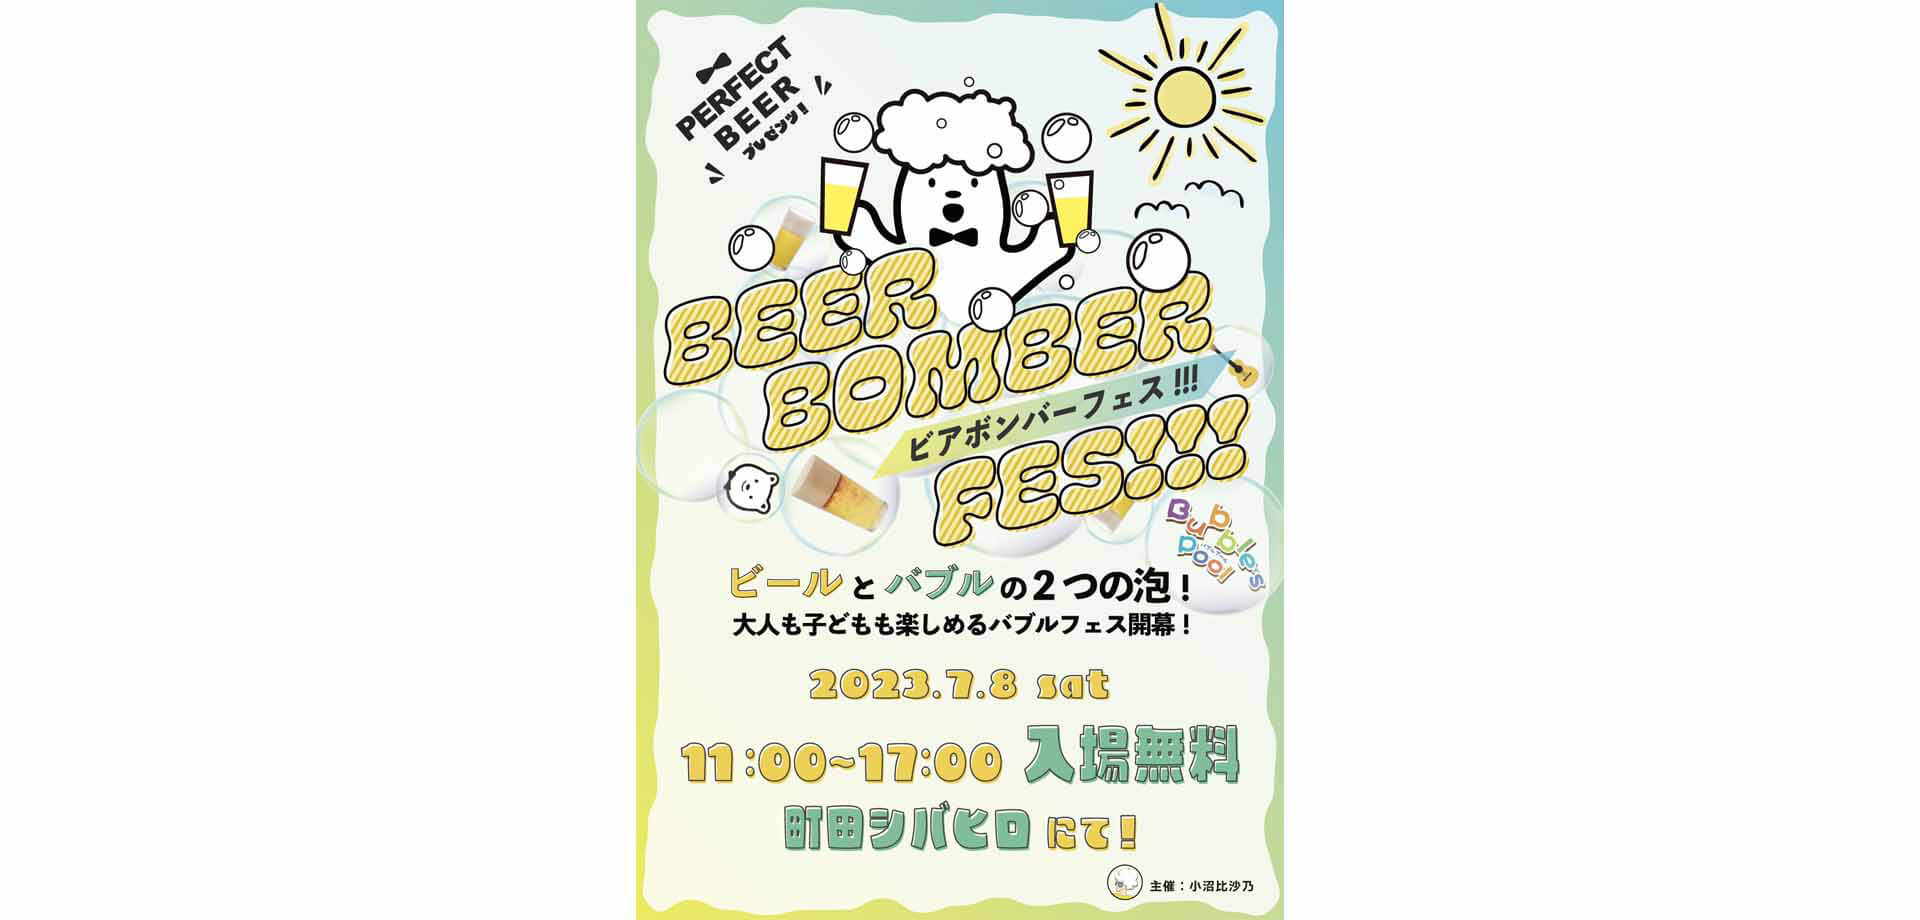 Beer Bomber Fes　ビアボンバーフェス　　町田シバヒロ